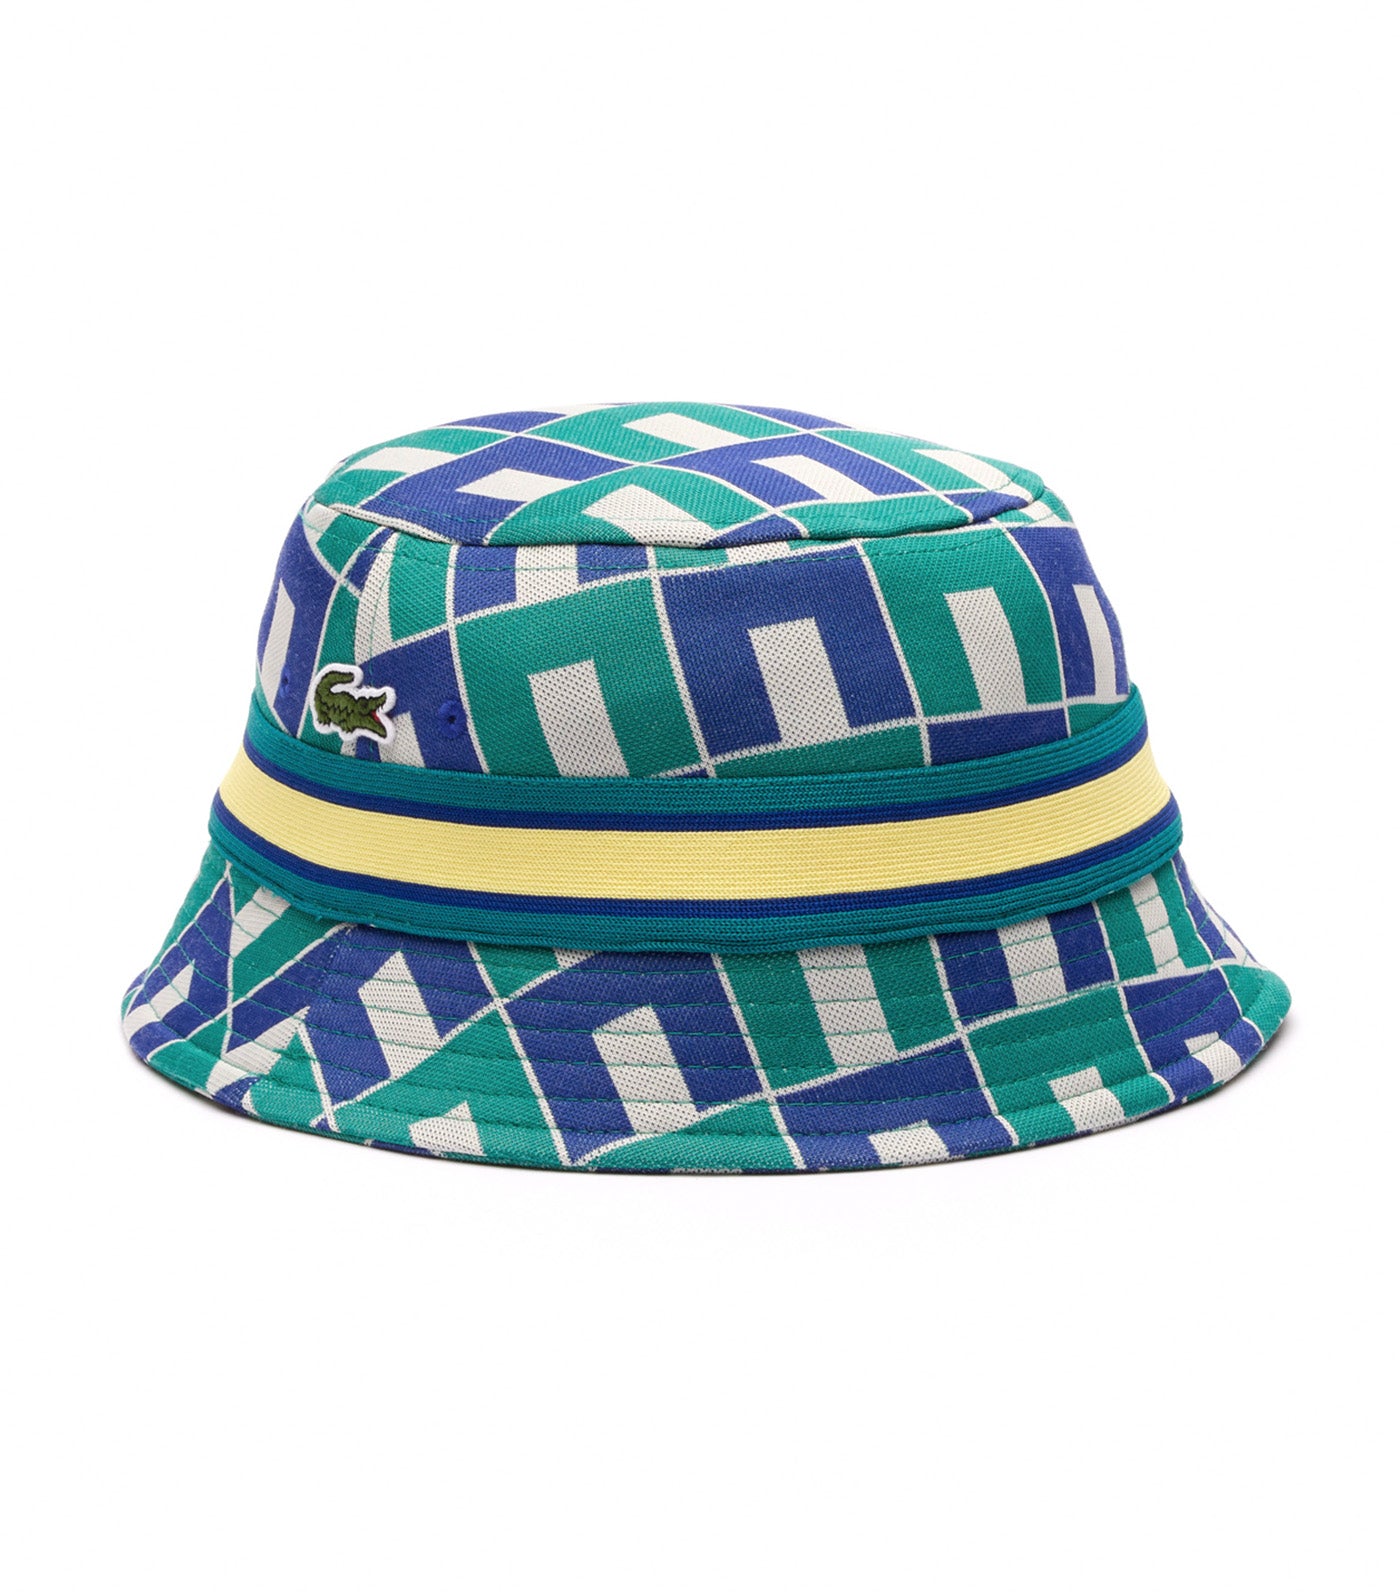 Interlock Jacquard Patterned Bucket Hat Mascarpone/Sloe 0/Undergrowth Green